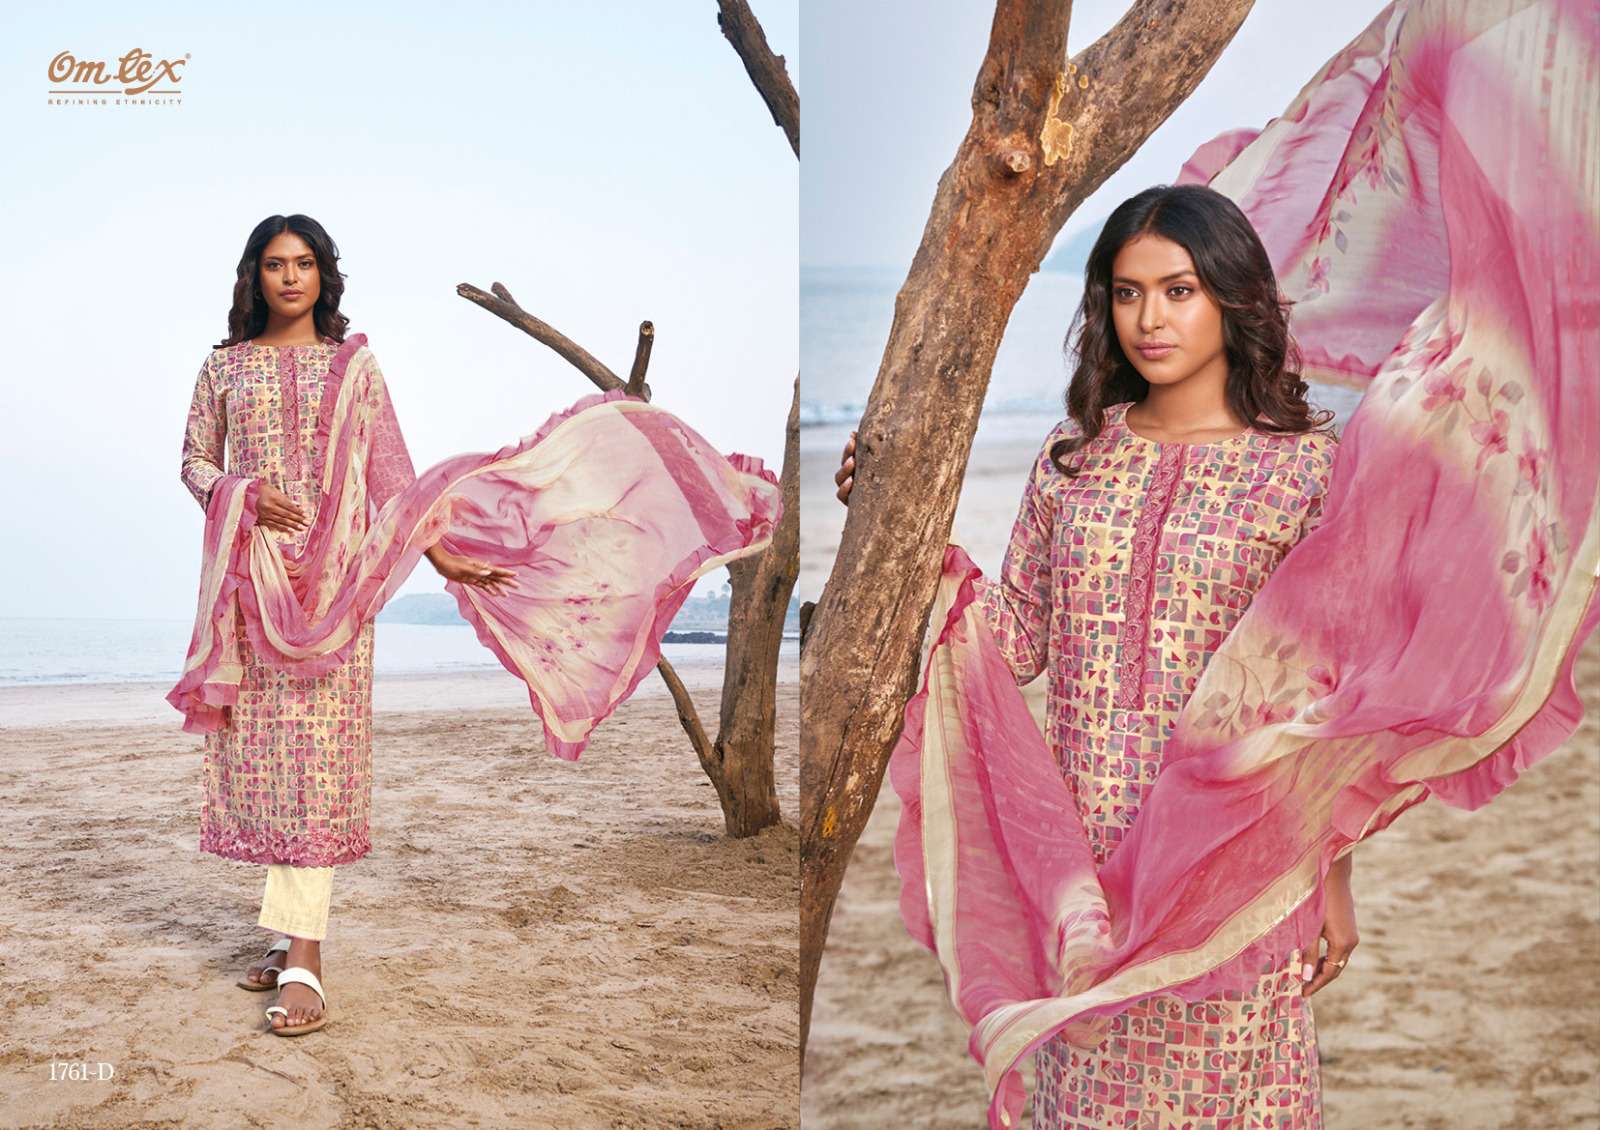 omtex by valuka 1761 colour series lawn cotton digital printed salwar kameez online dealer wholesale best rate 